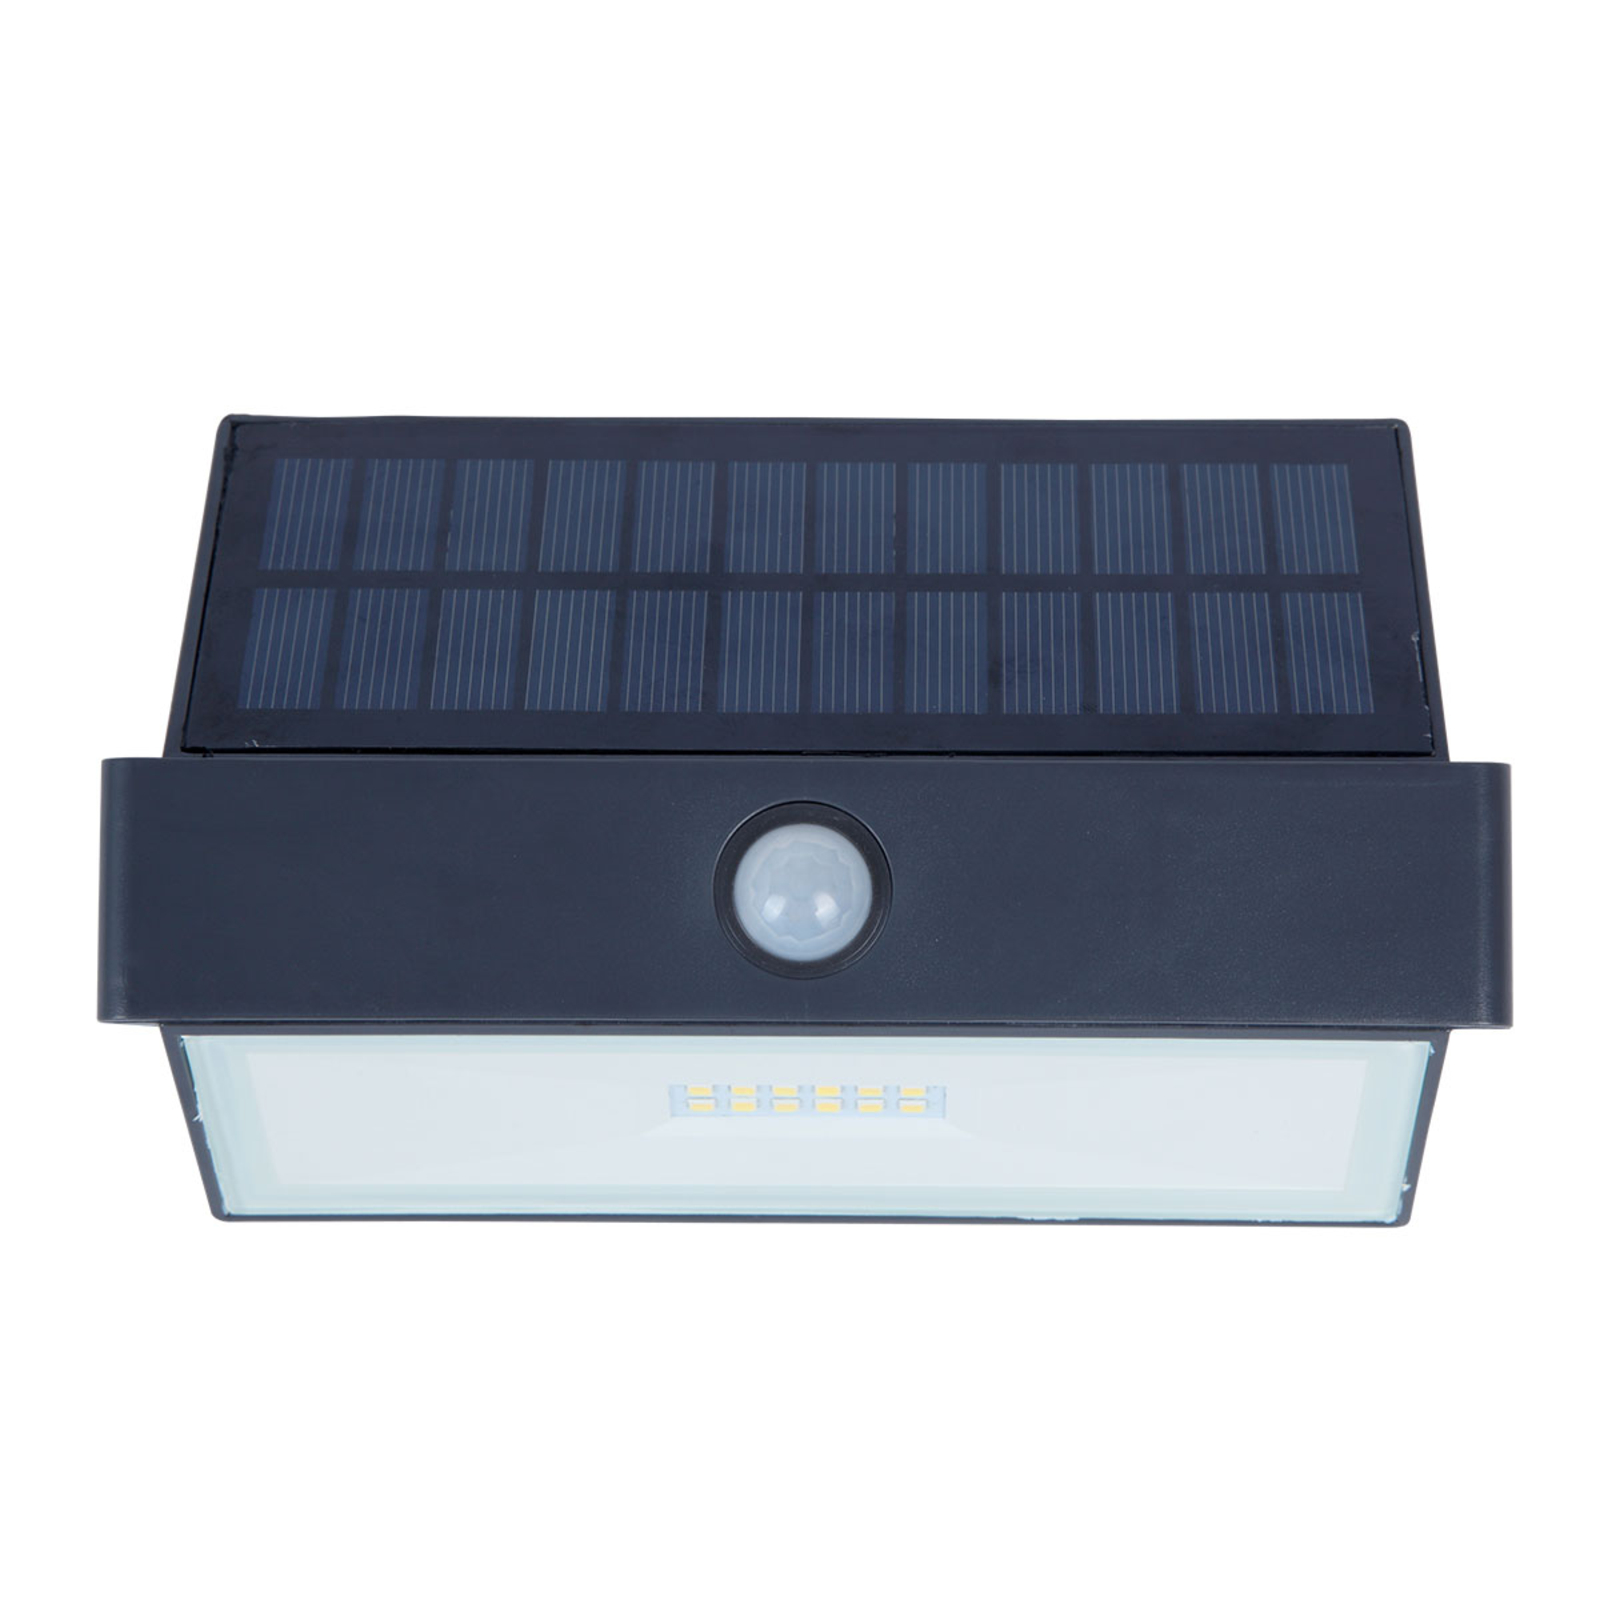 Arrow - Solar-Wandlampe mit LED und Sensor